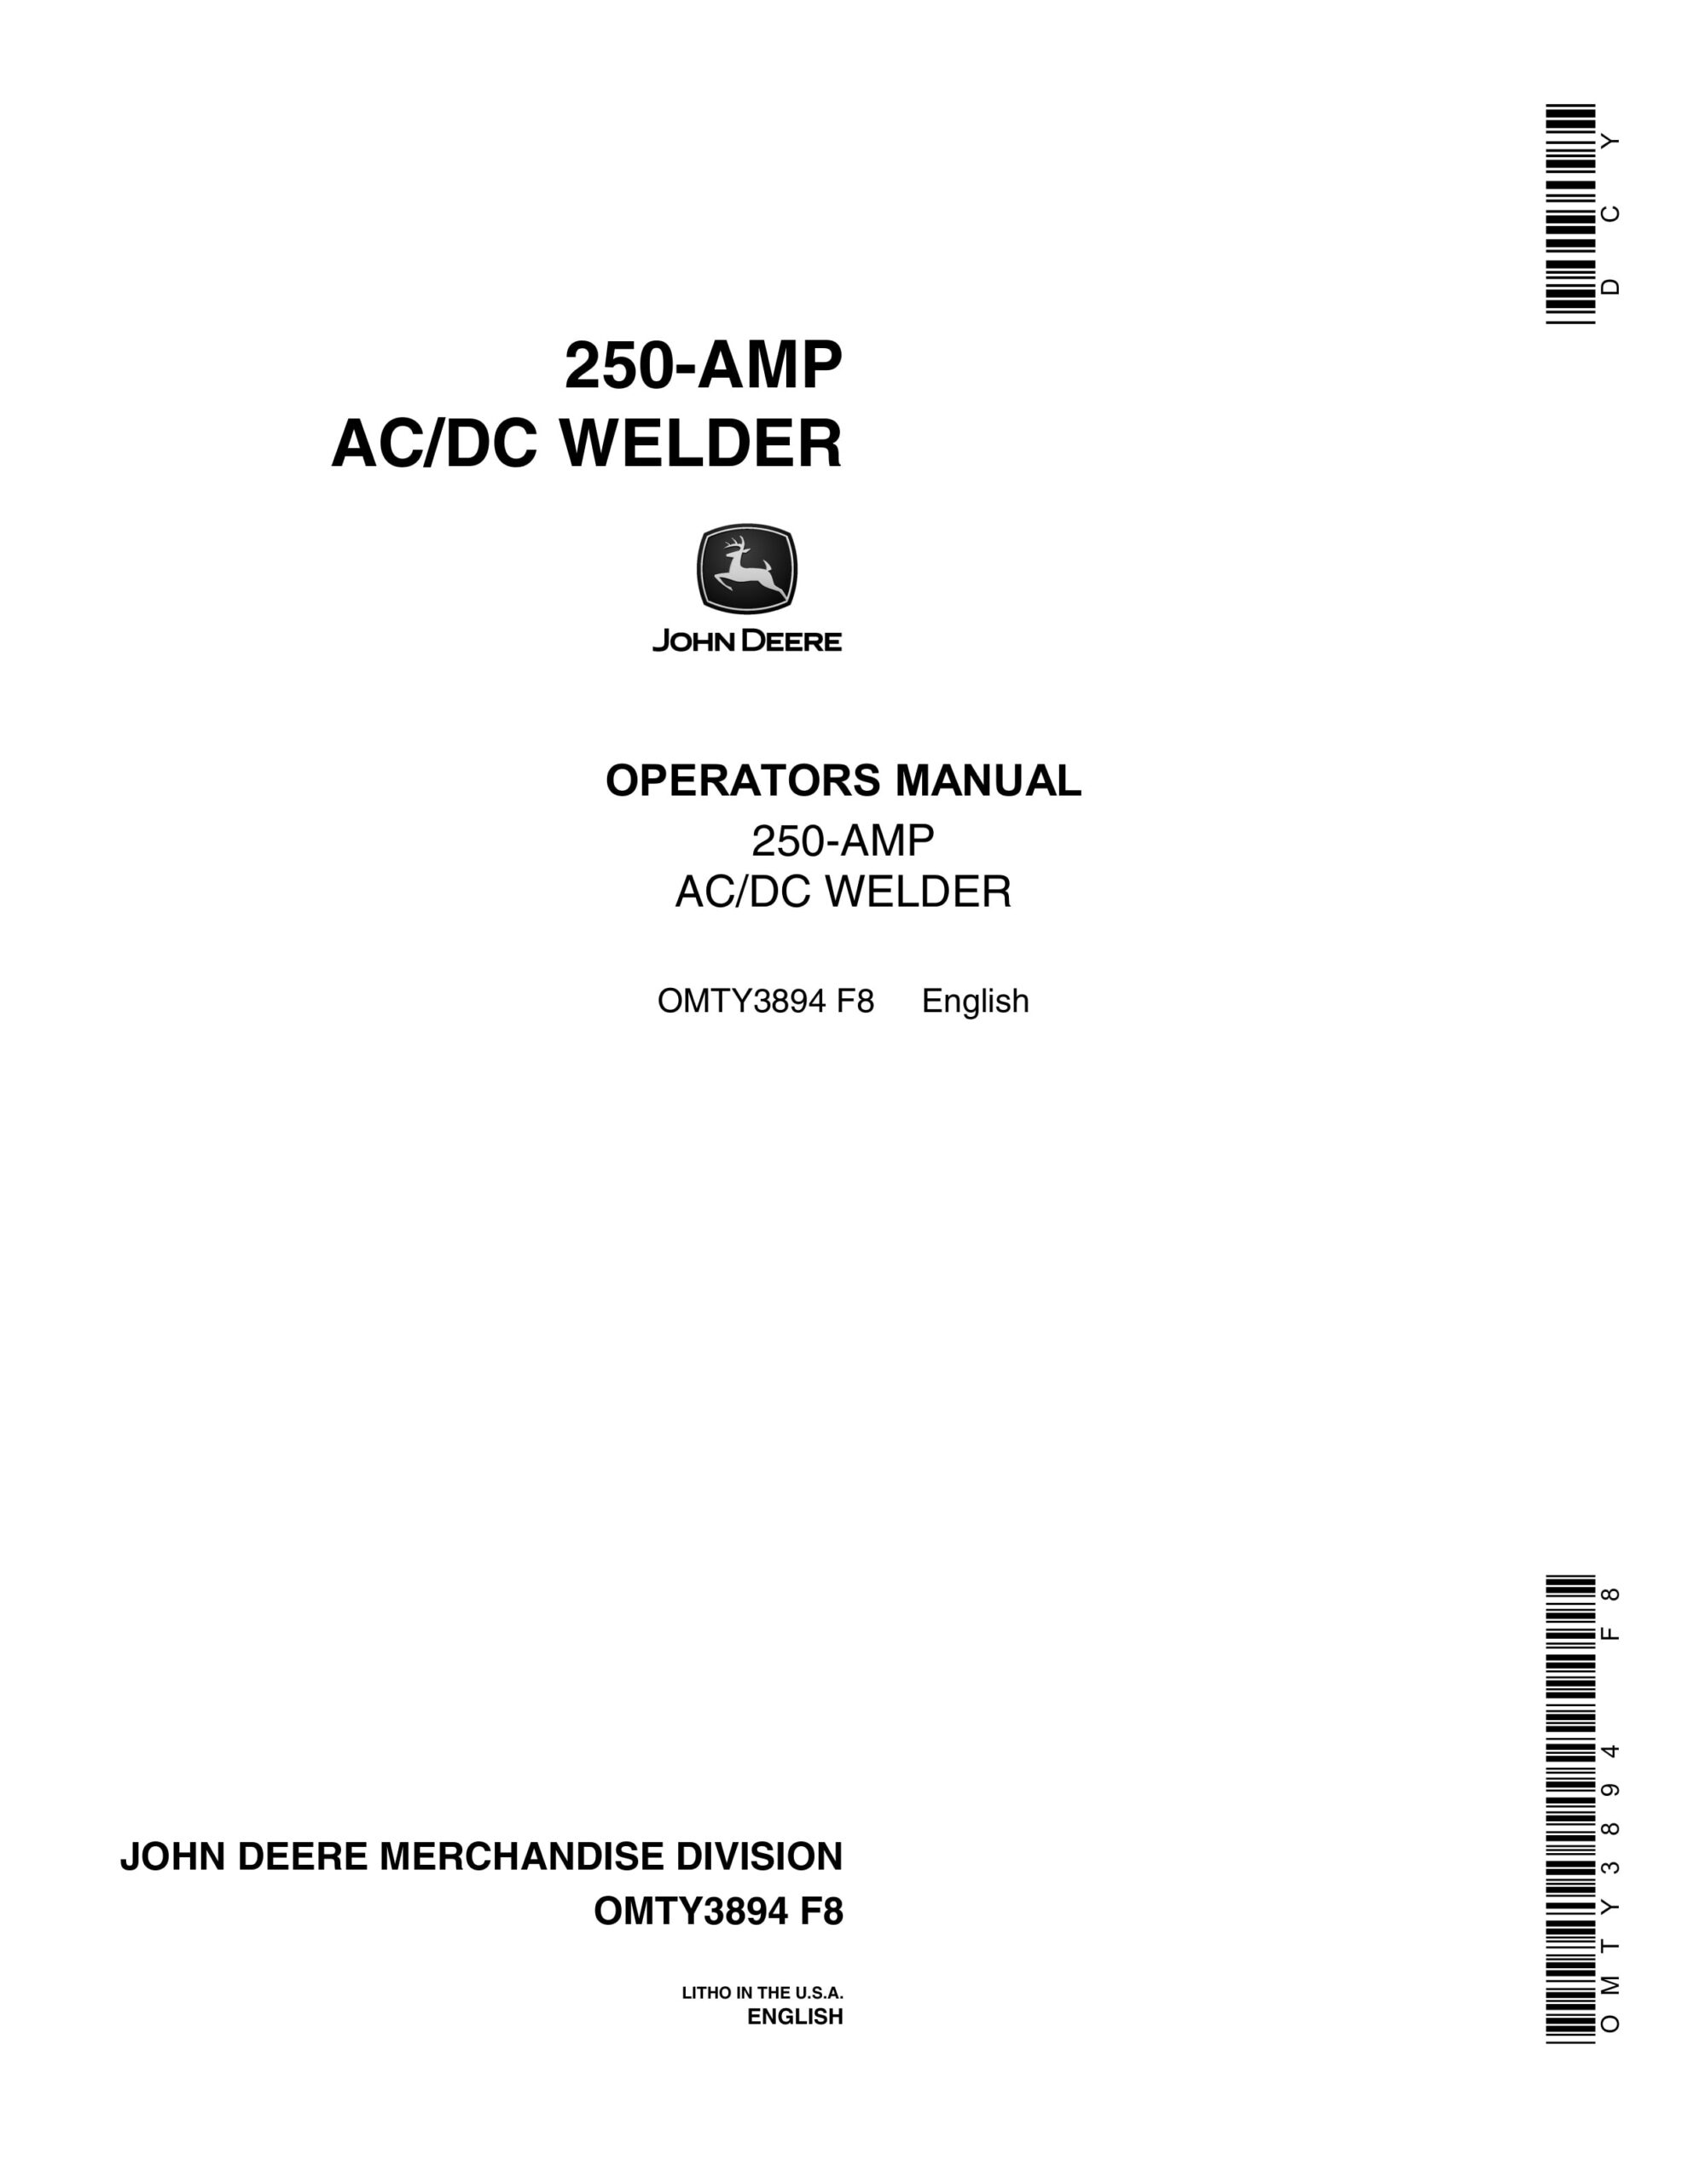 John Deere 250-AMP AC DC WELDER Operator Manual OMTY3894-1